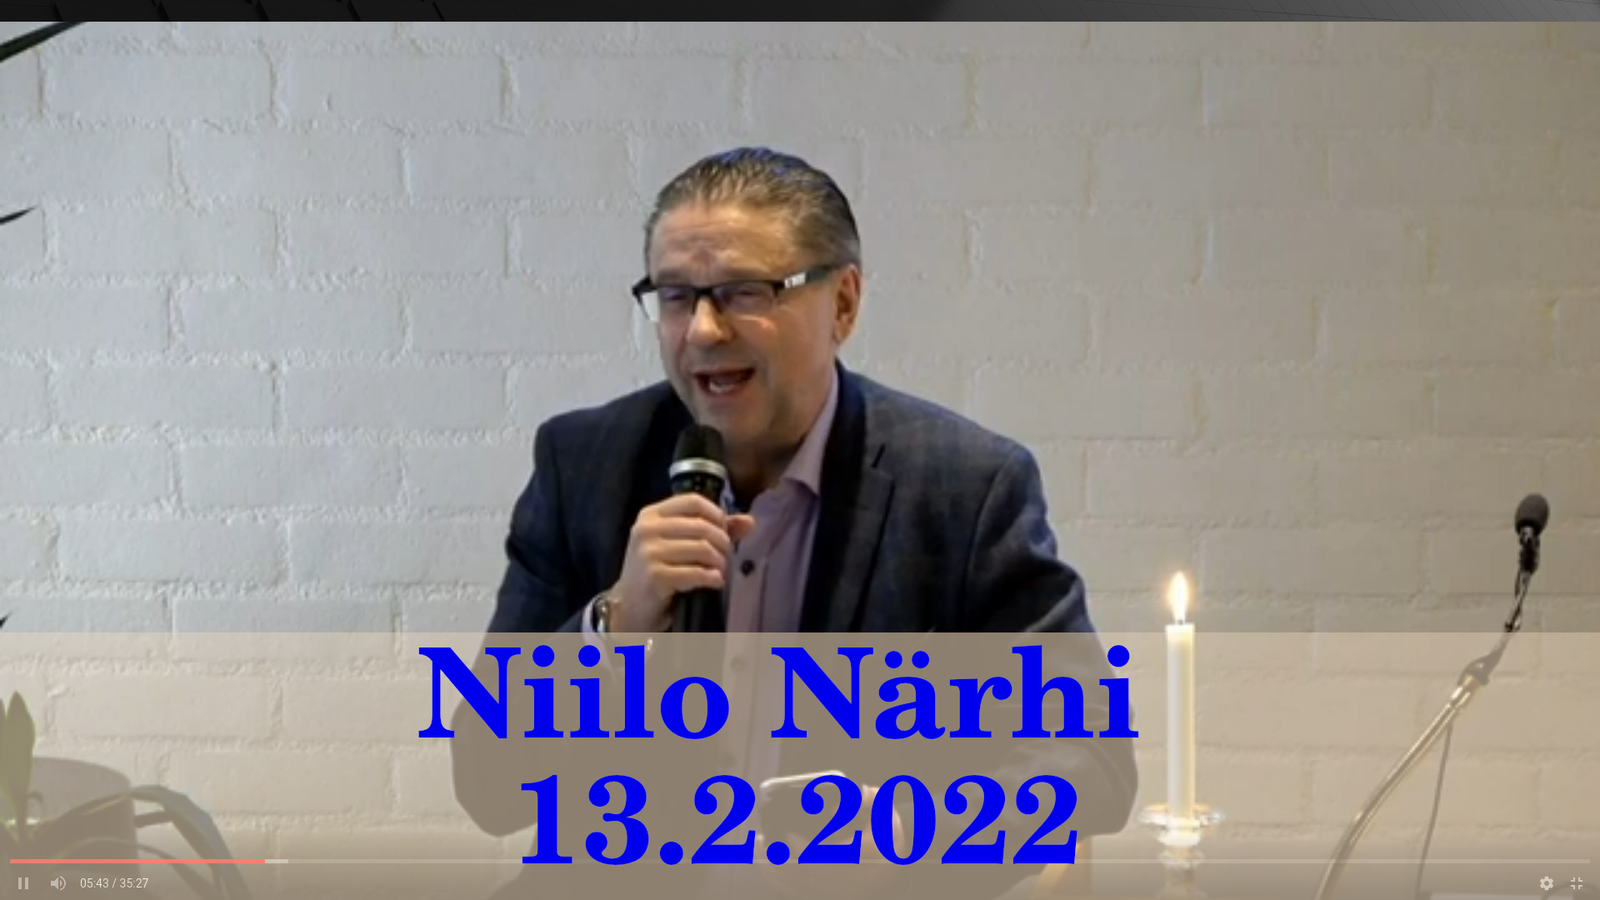 Niilo Närhi 13.2.2022